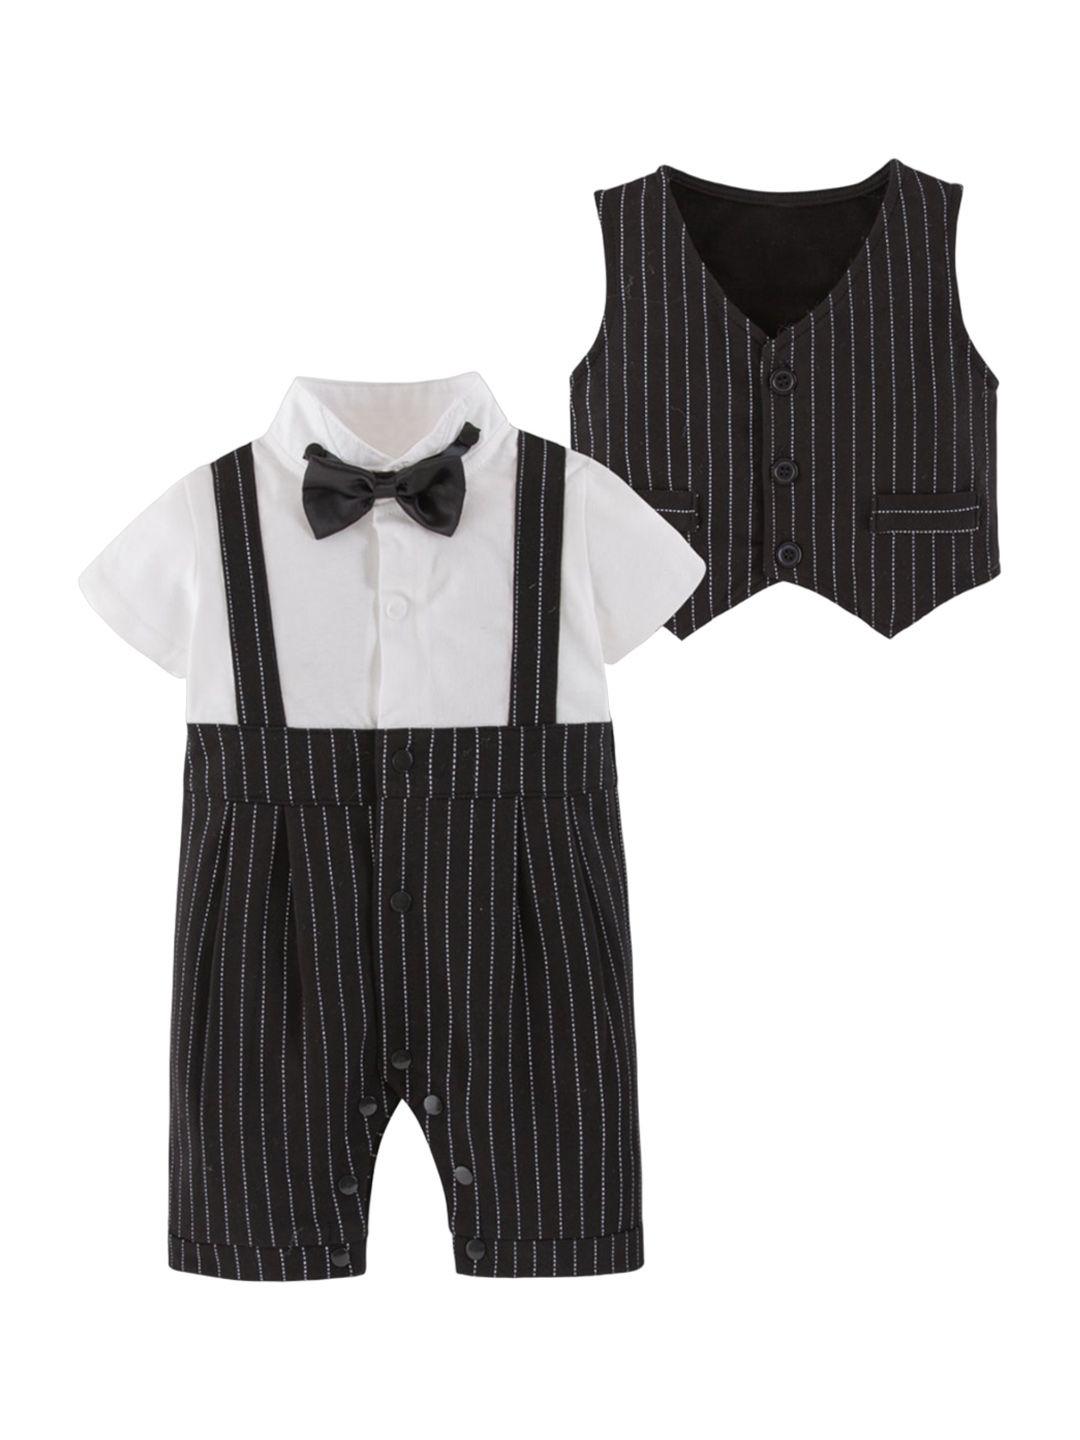 stylecast-infants-boys-striped-cotton-romper-with-jacket